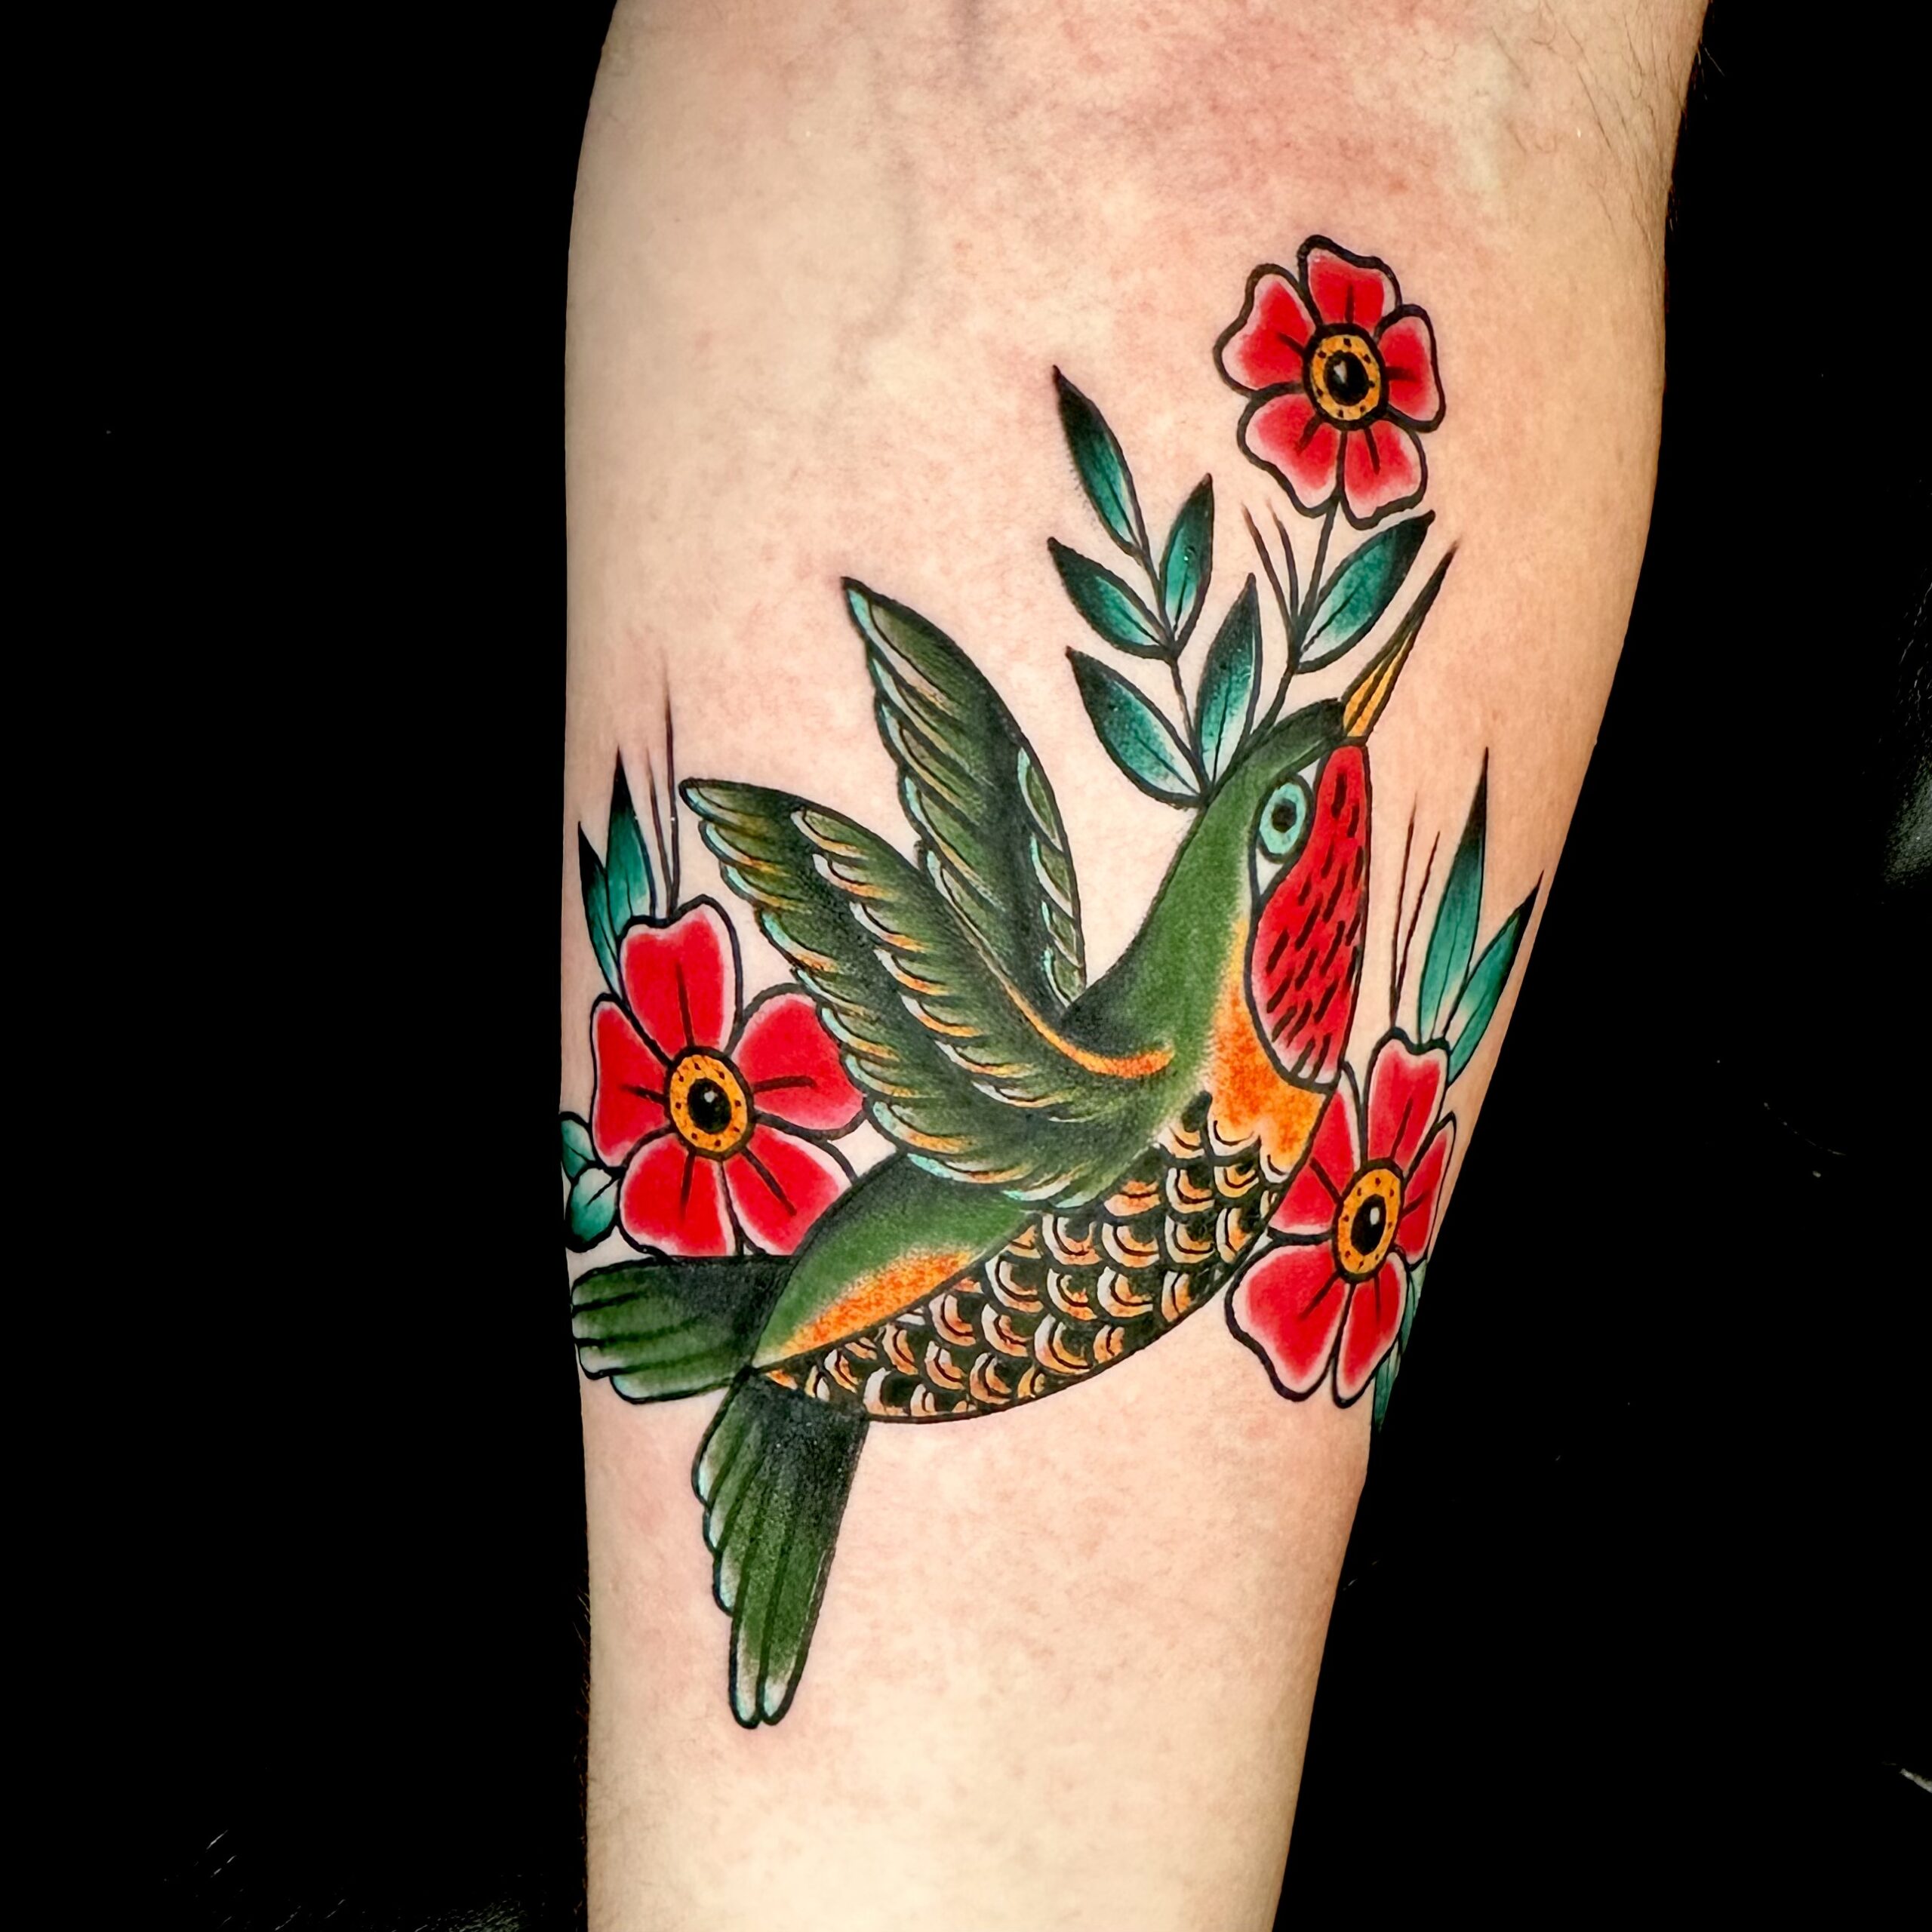 Tattoo of a hummingbird and flowers